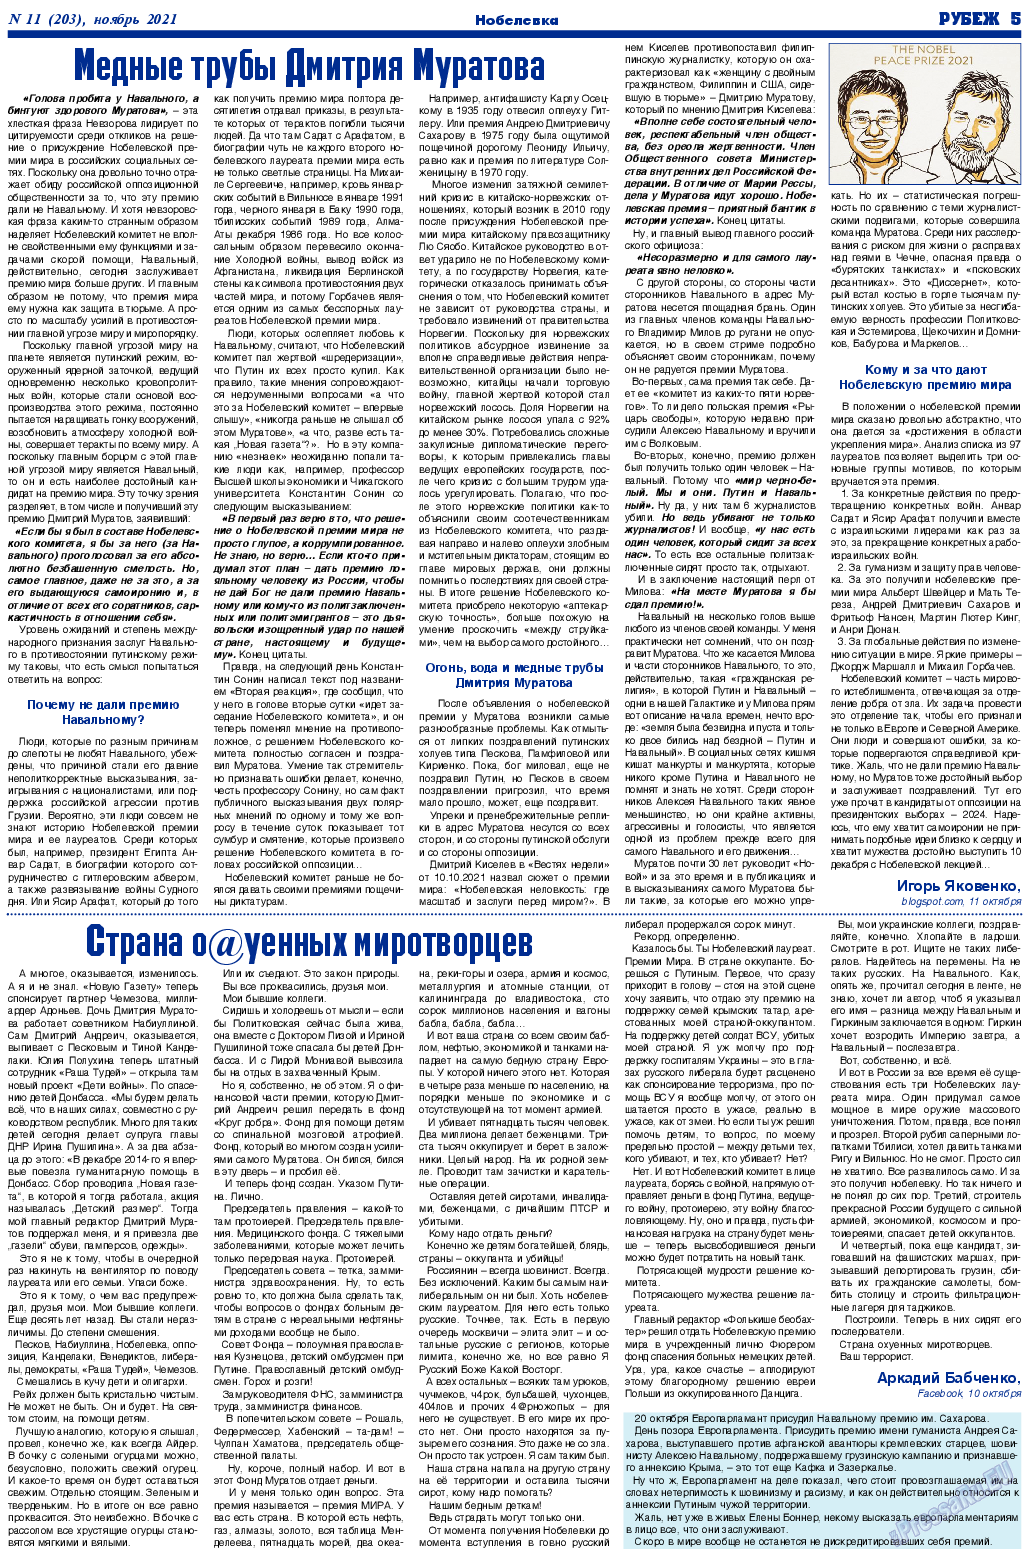 Рубеж, газета. 2021 №11 стр.5